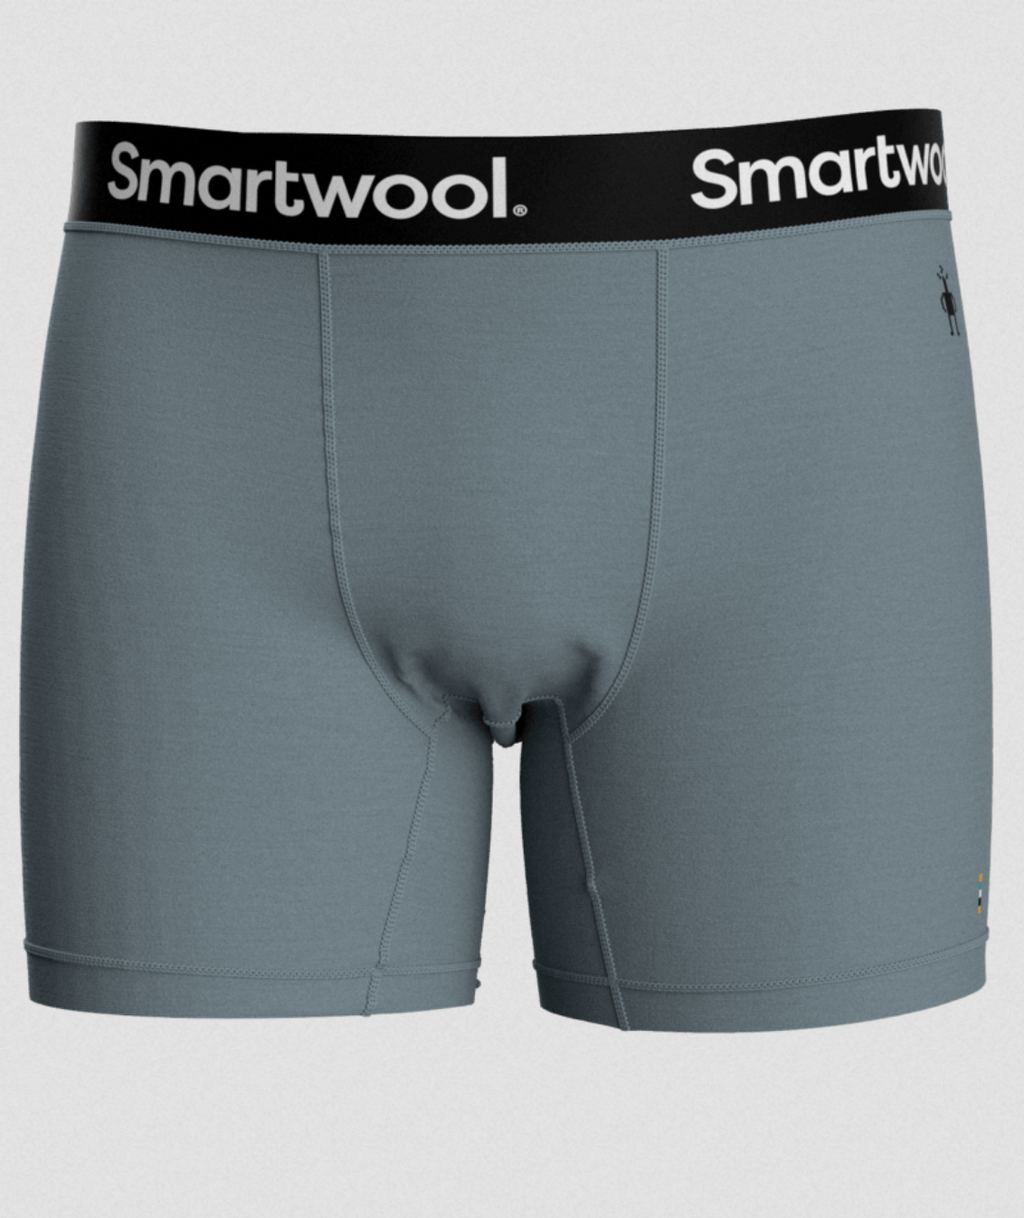 Smartwool Men's Boxer Brief *SALE*